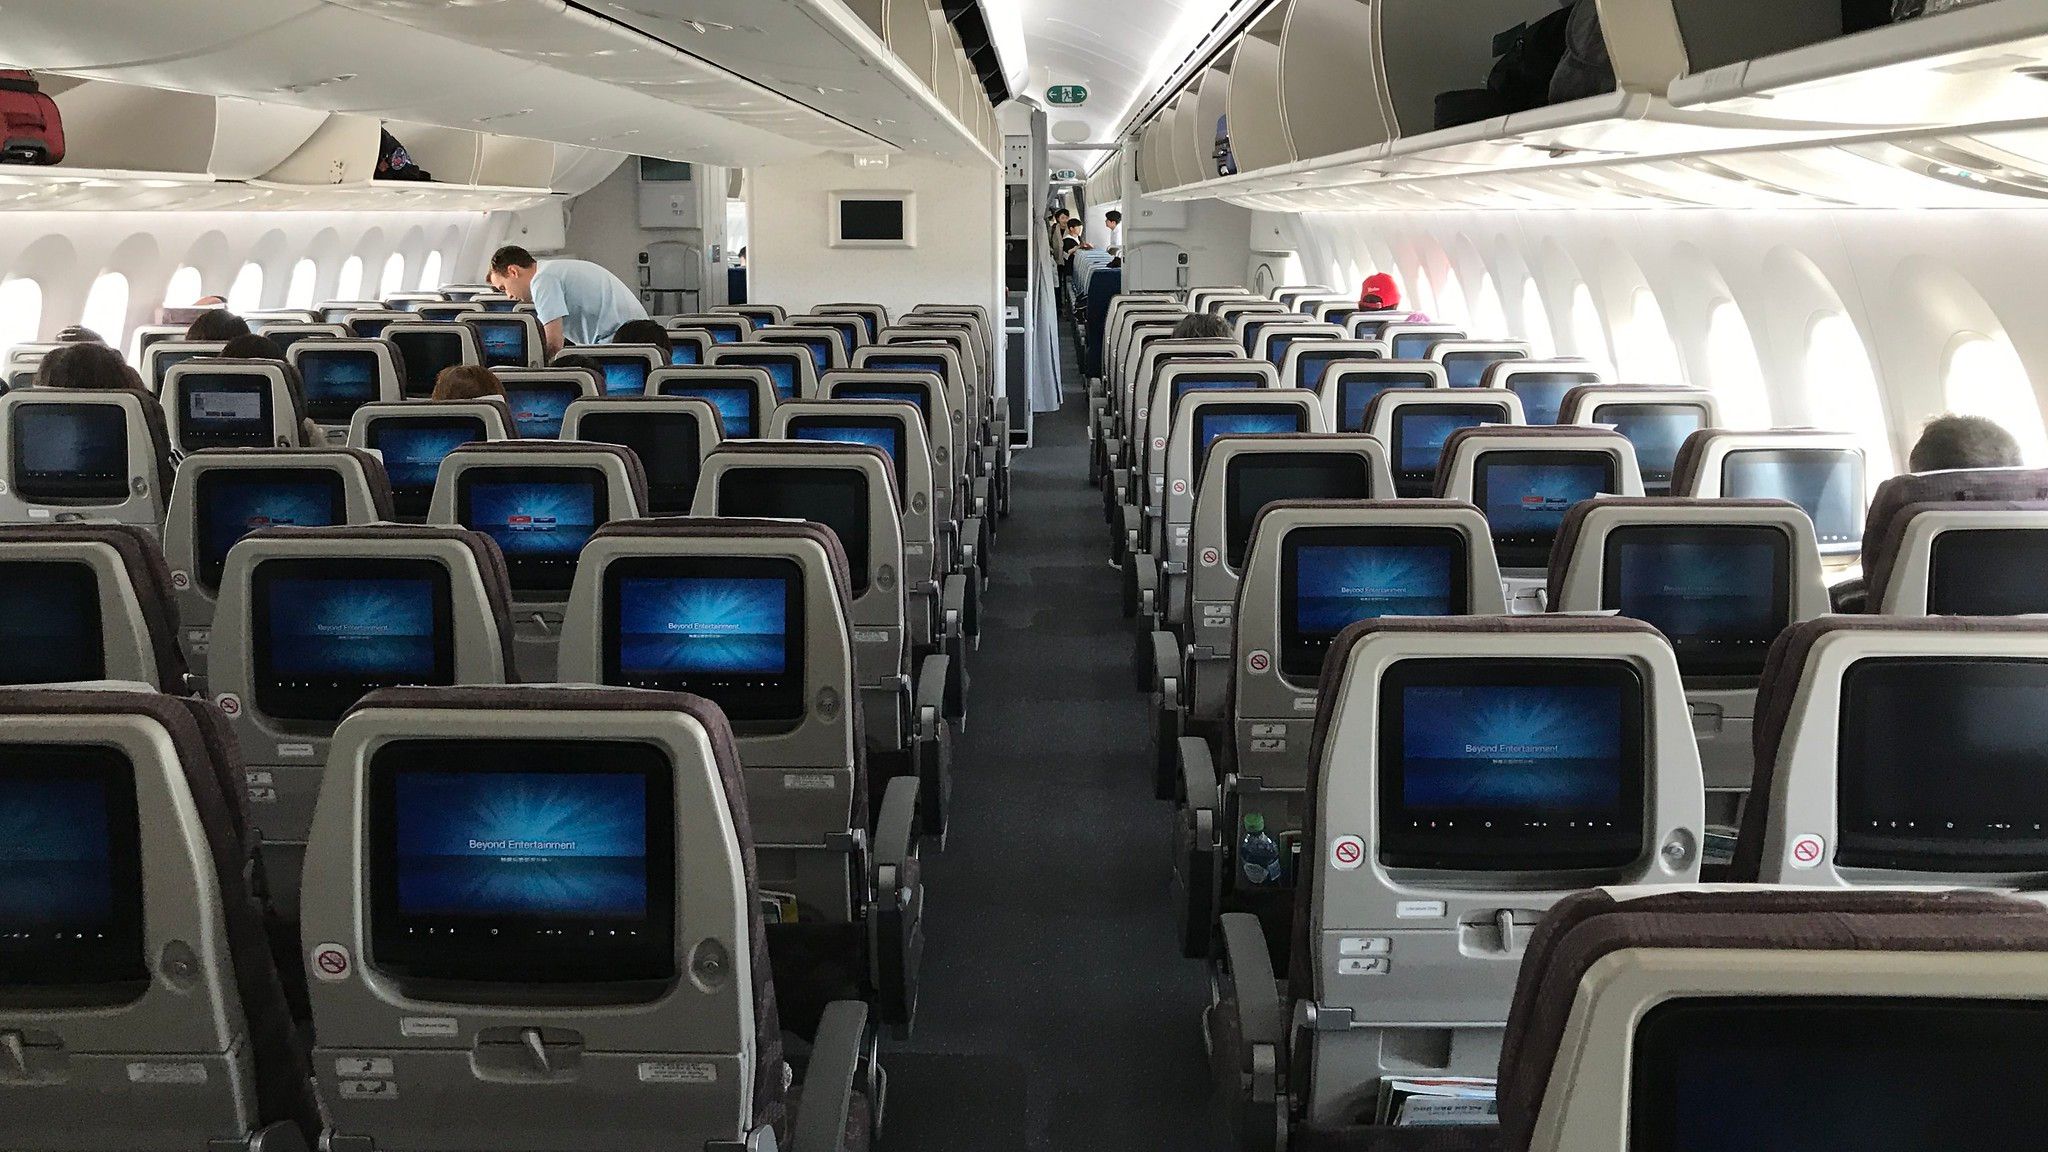 Inside the Korean Air Boeing 787-9 economy class cabin.